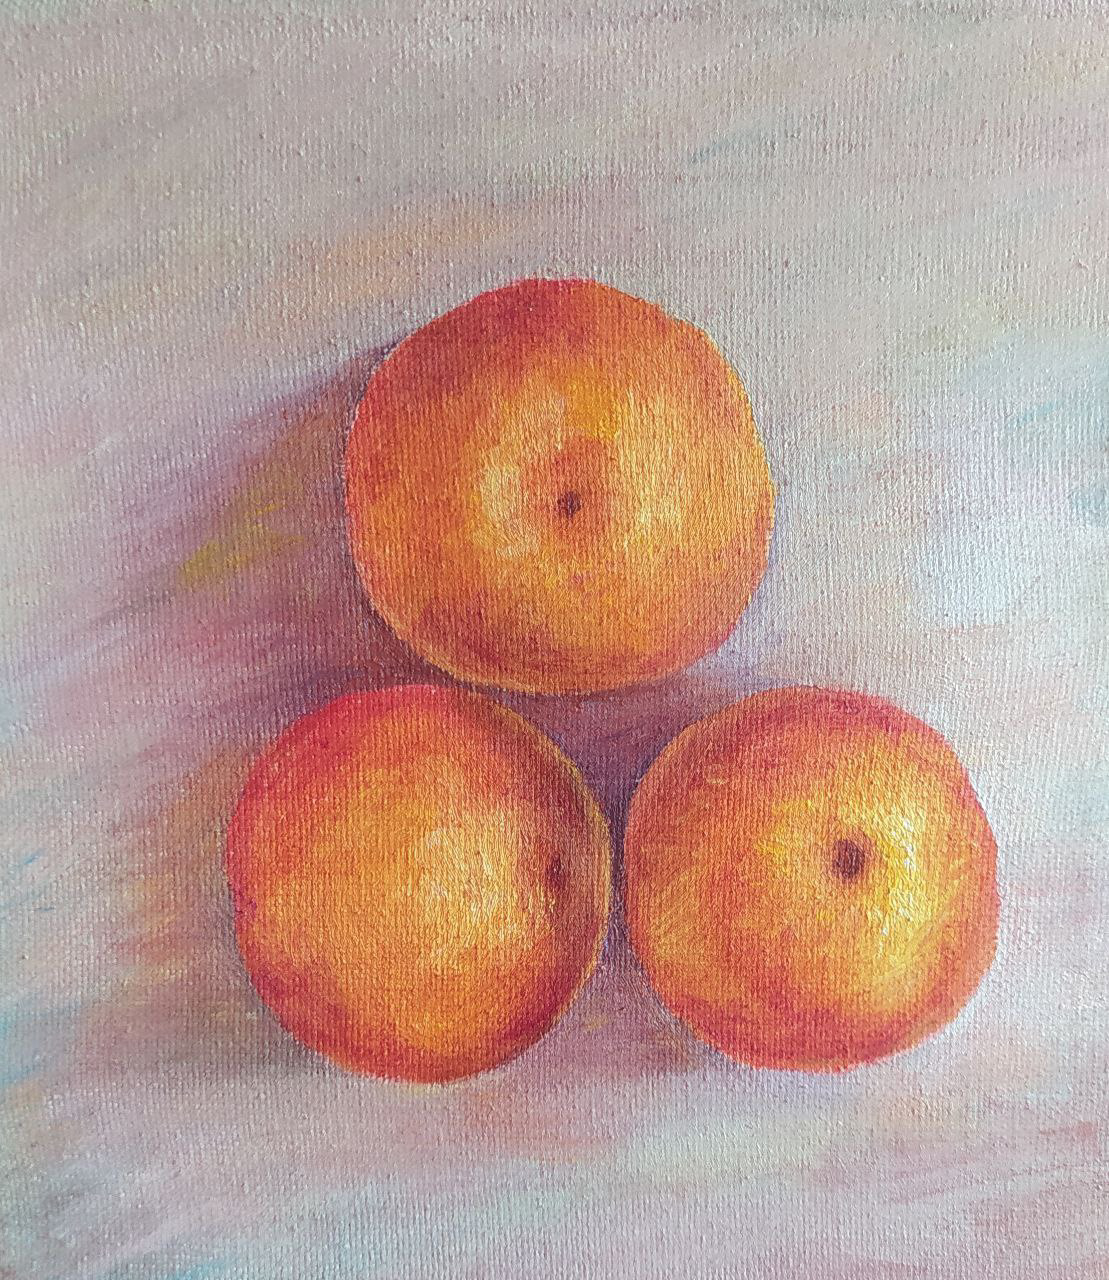 Oil Painting fine art artwork Fruit orange Picture painter artist painting   mandarine